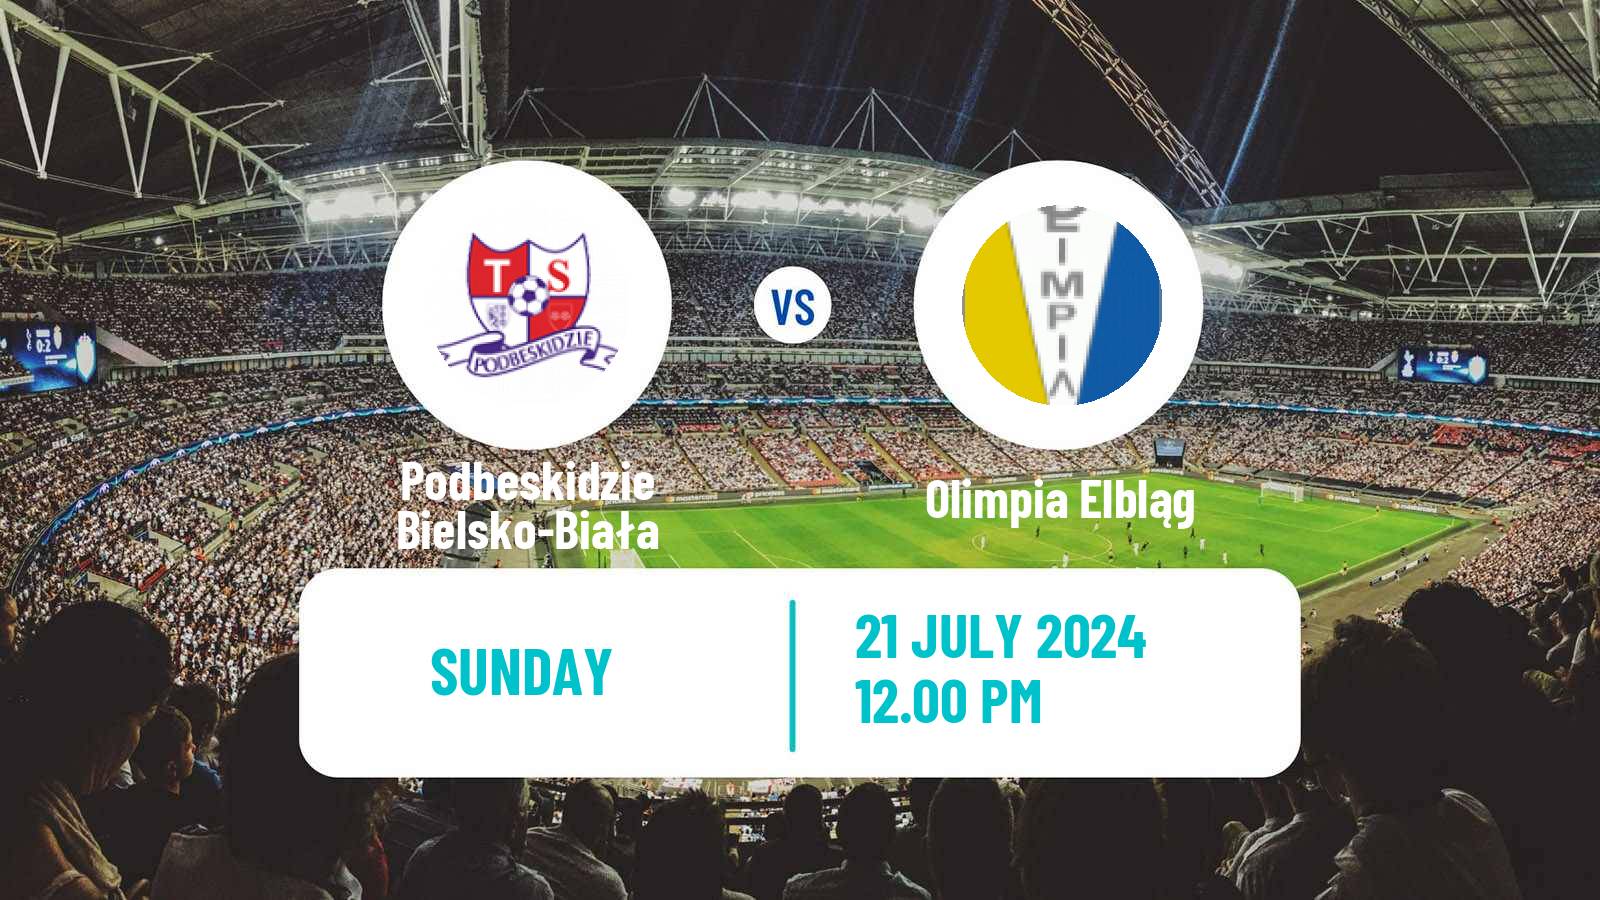 Soccer Polish Division 2 Podbeskidzie Bielsko-Biała - Olimpia Elbląg